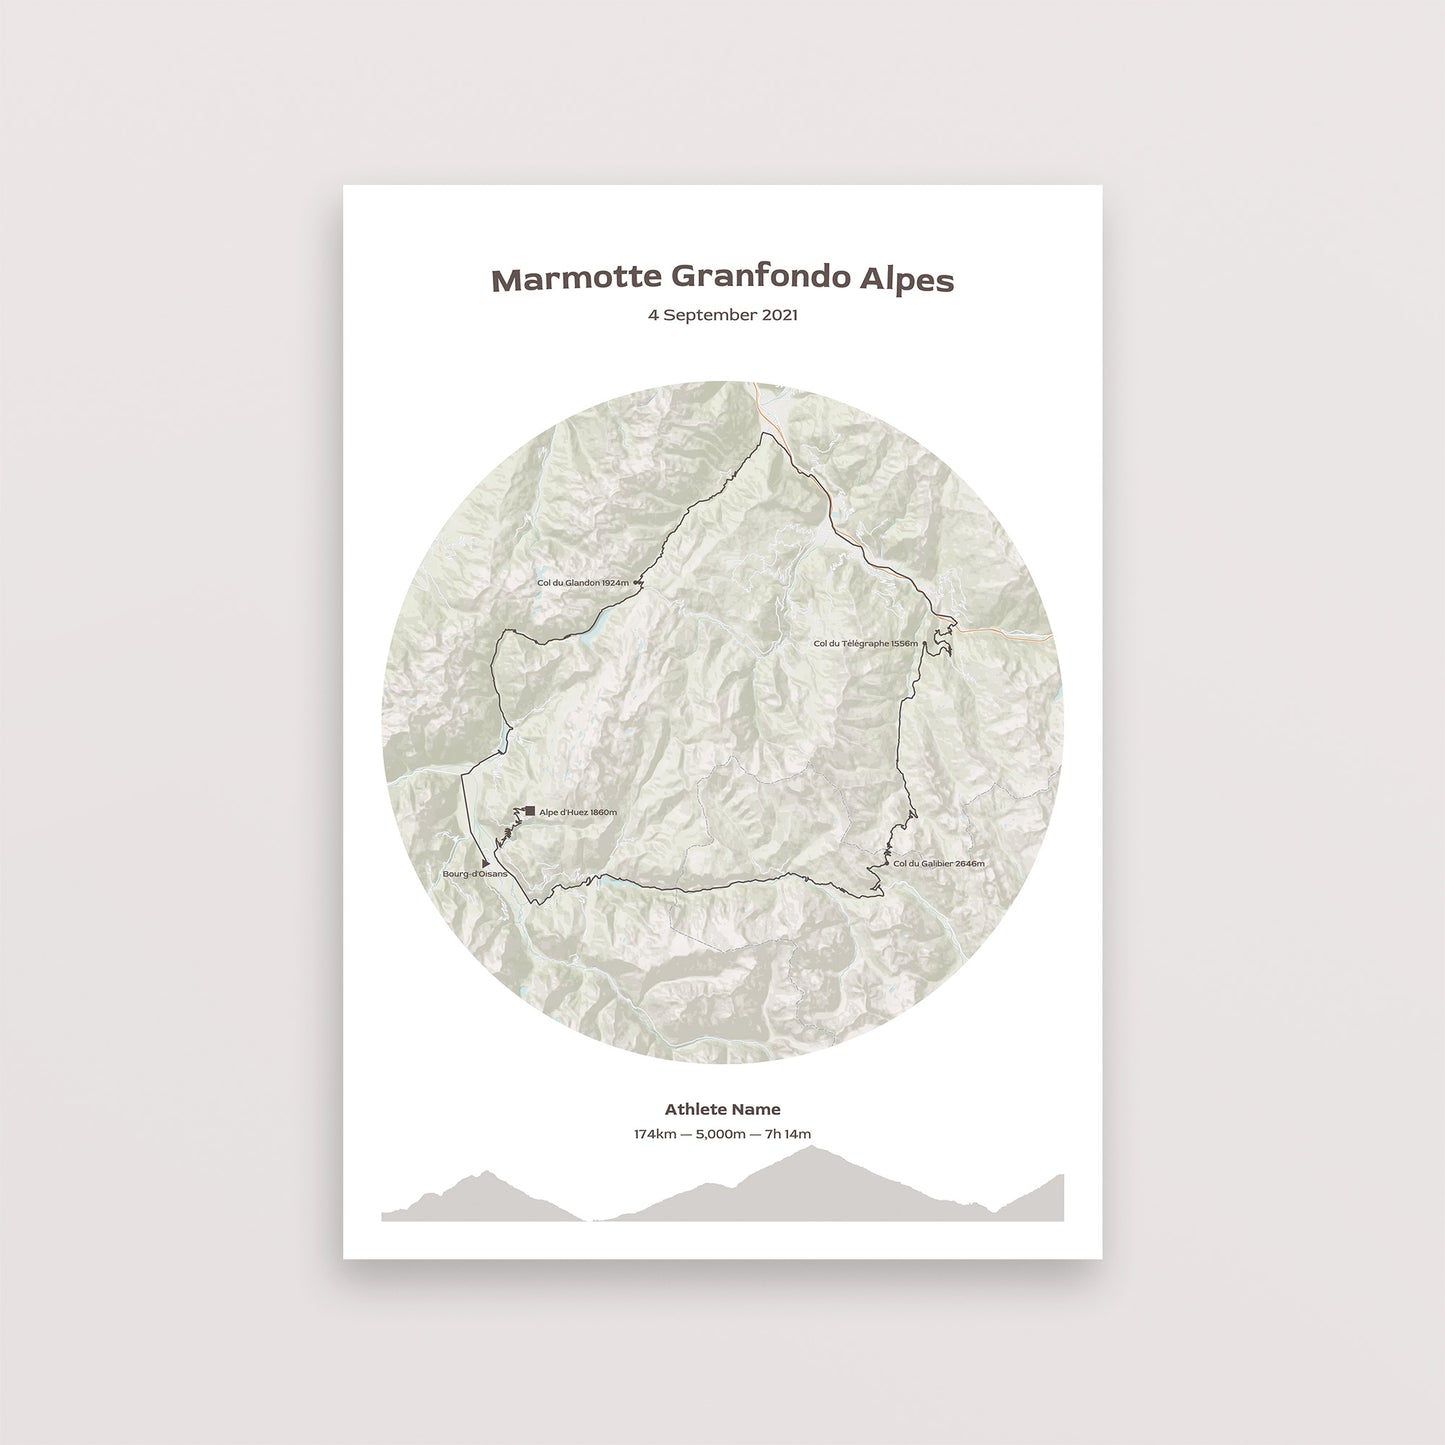 Marmotte Granfondo Alpes | Poster | The English Cyclist